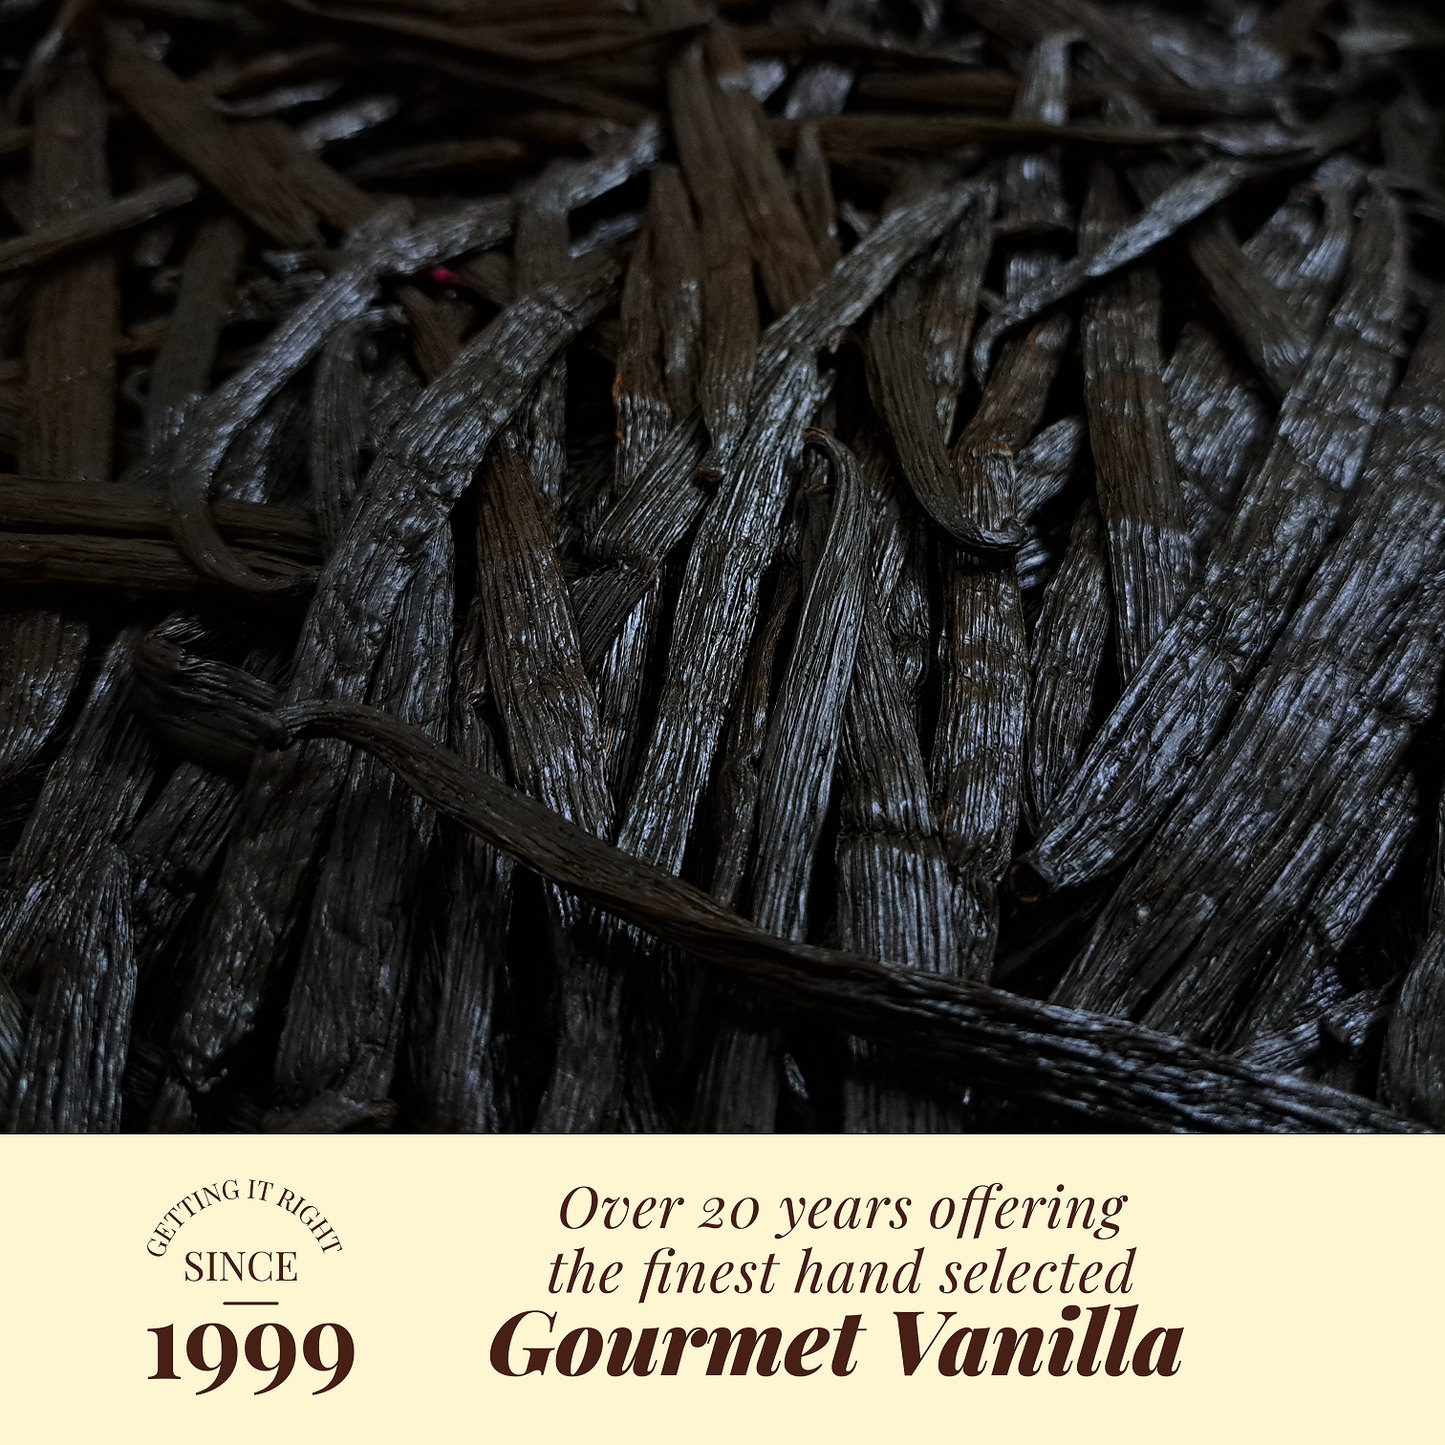 500 Grams Whole Premium Bulk Vanilla Beans Grade A  – Perfect For Making Vanilla Extract Baking, & More